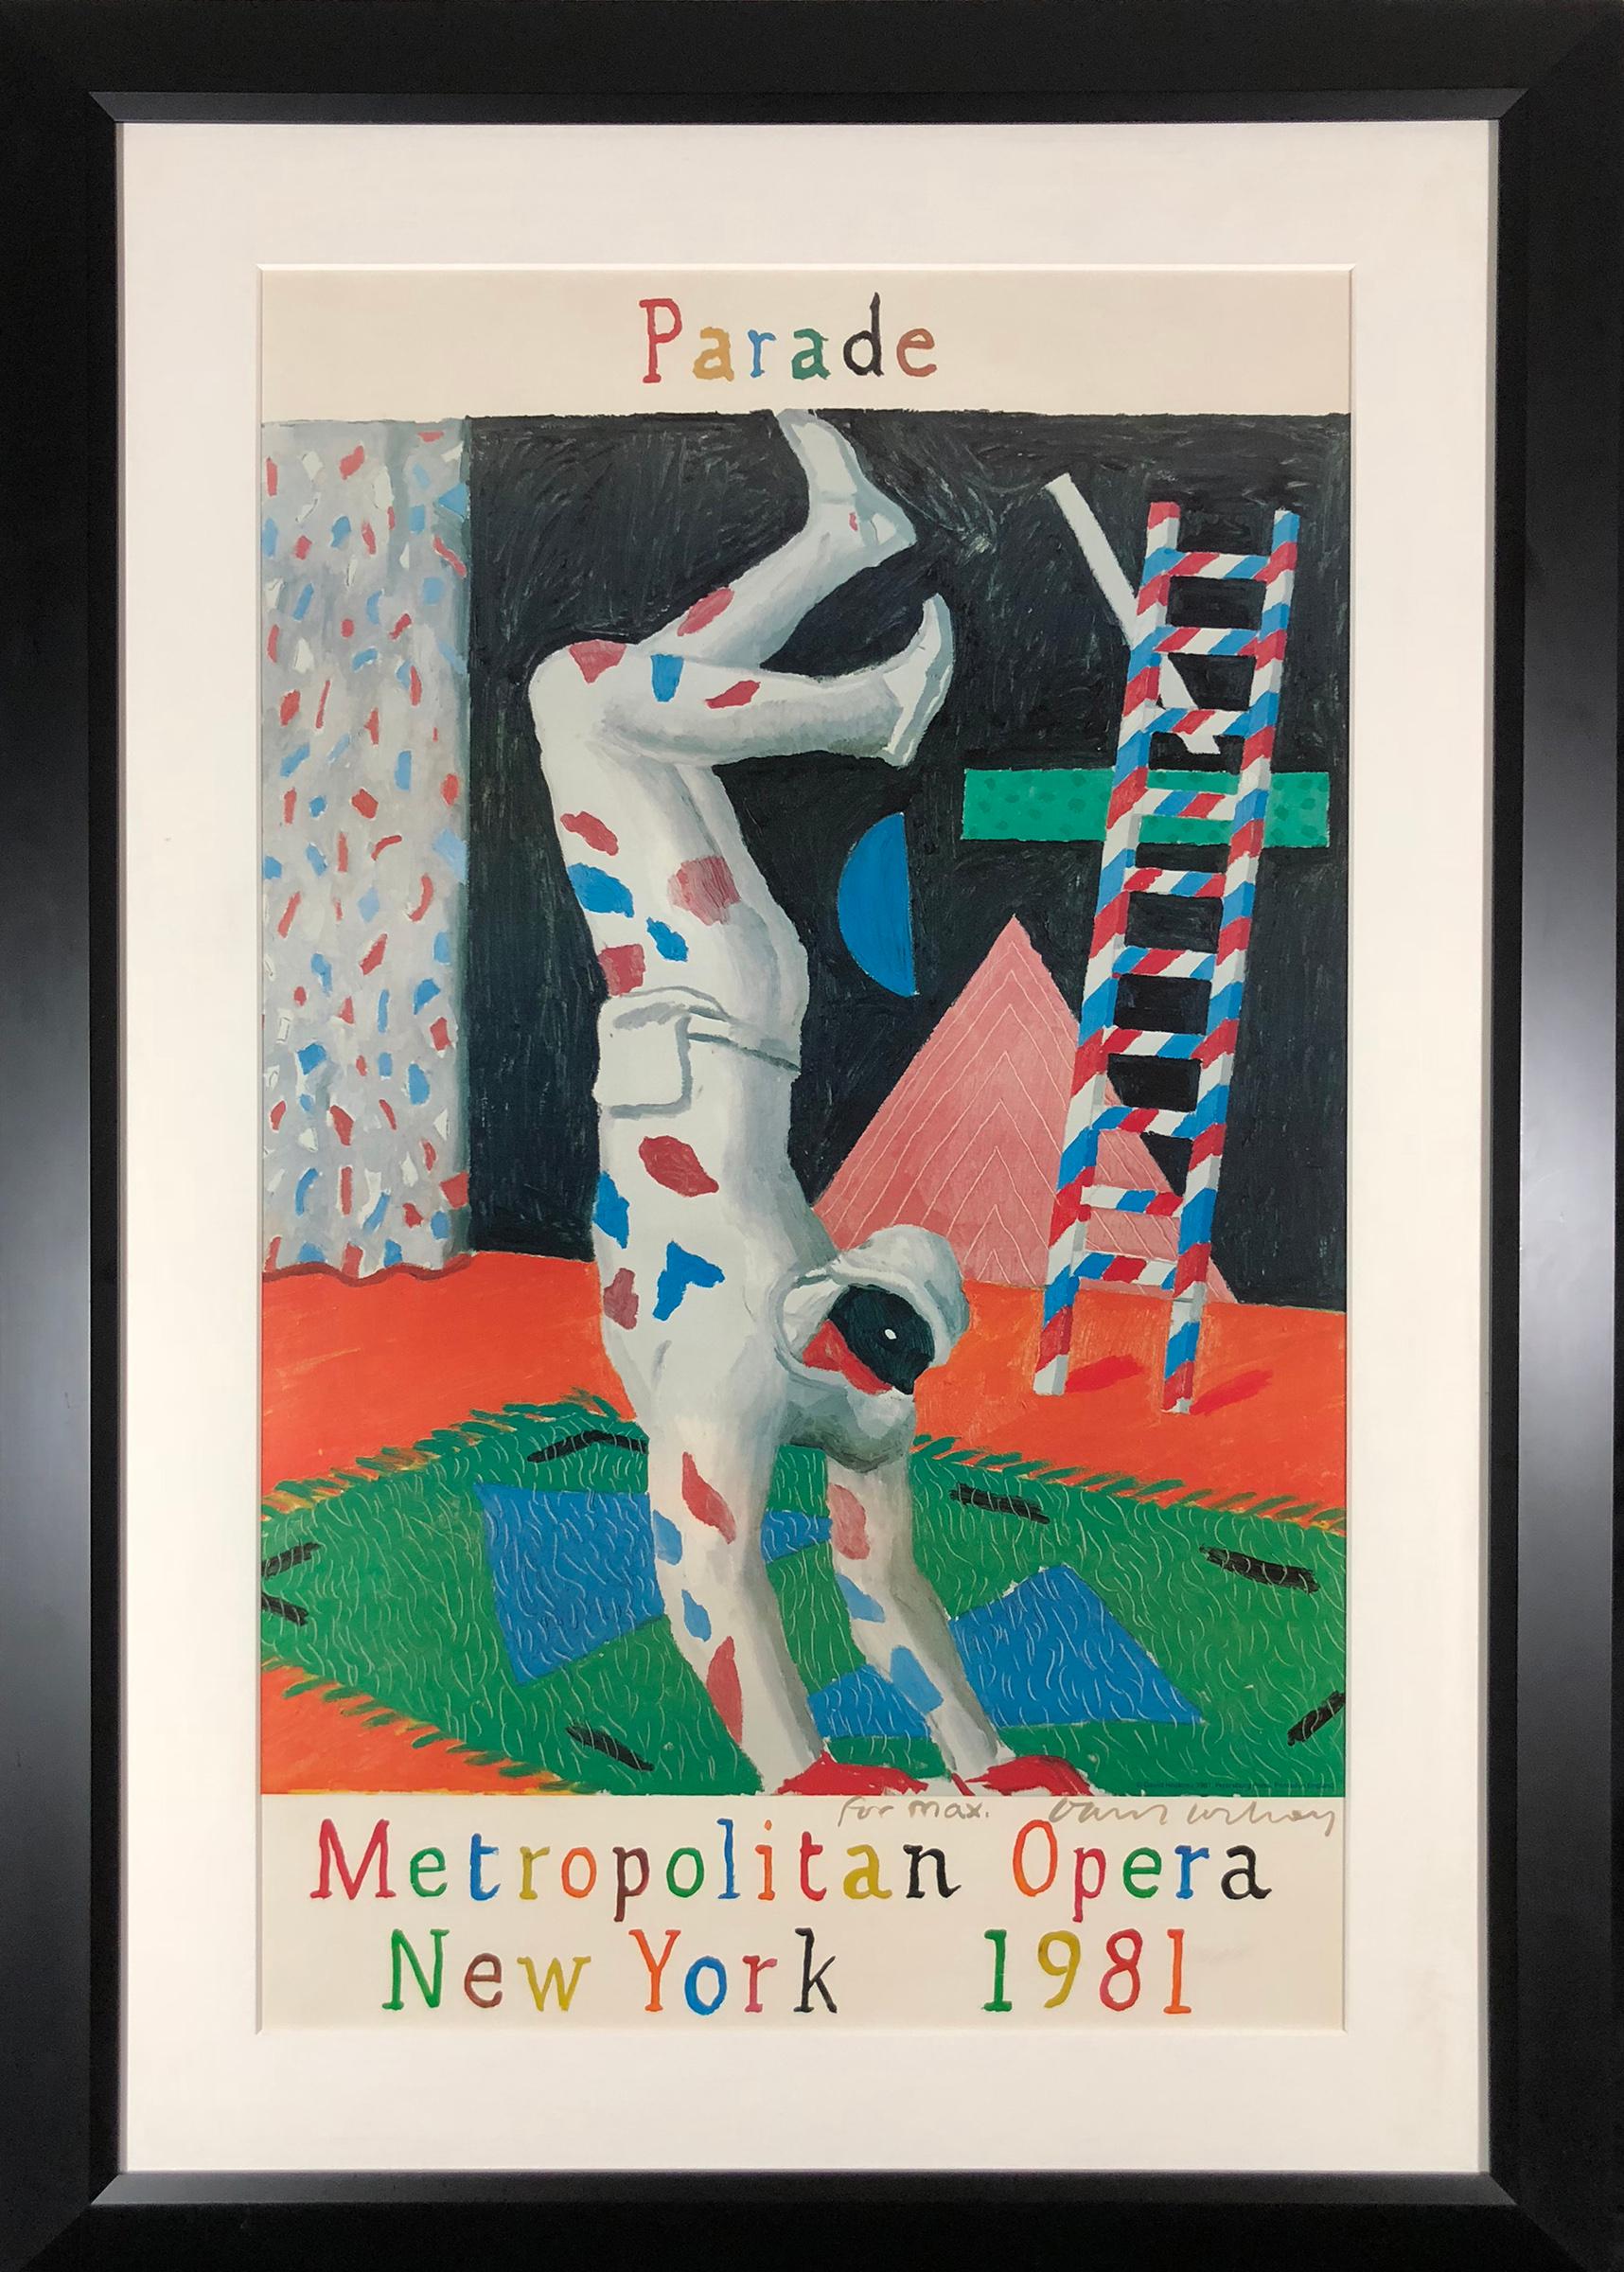 Parade, Metropolitan Opera - Print by David Hockney